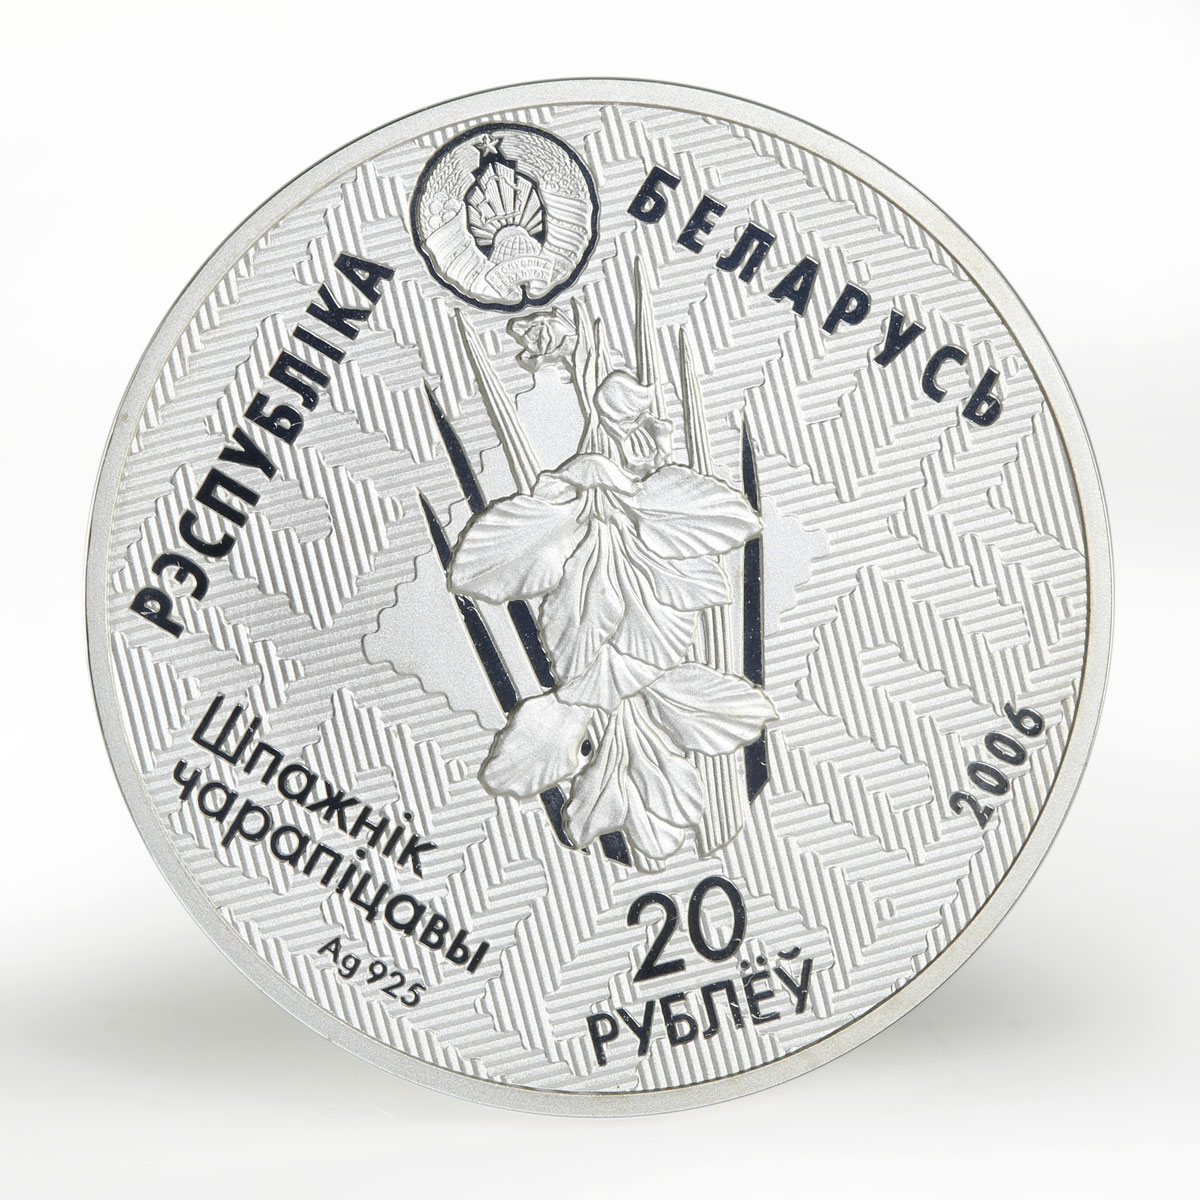 Belarus 20 rubles Chervony Bor mink proof silver coin 2006